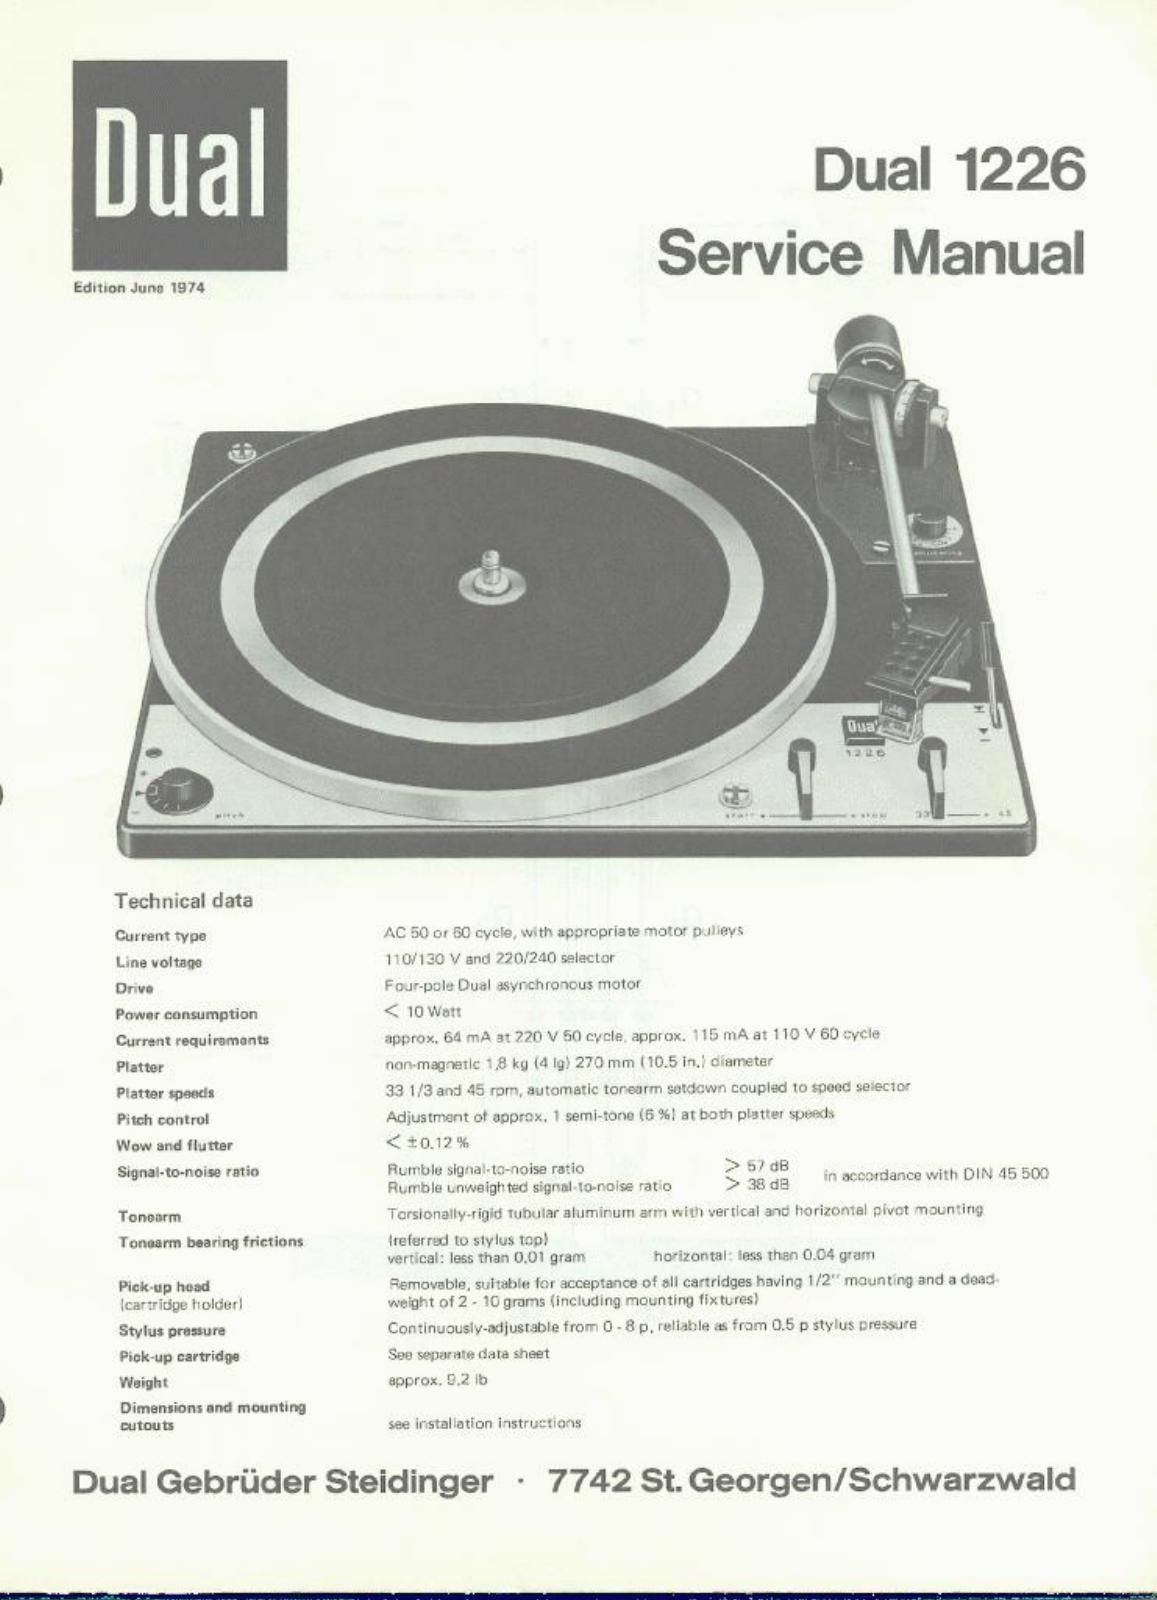 Free Audio Service Manuals - Free download Dual 1226 Service Manual